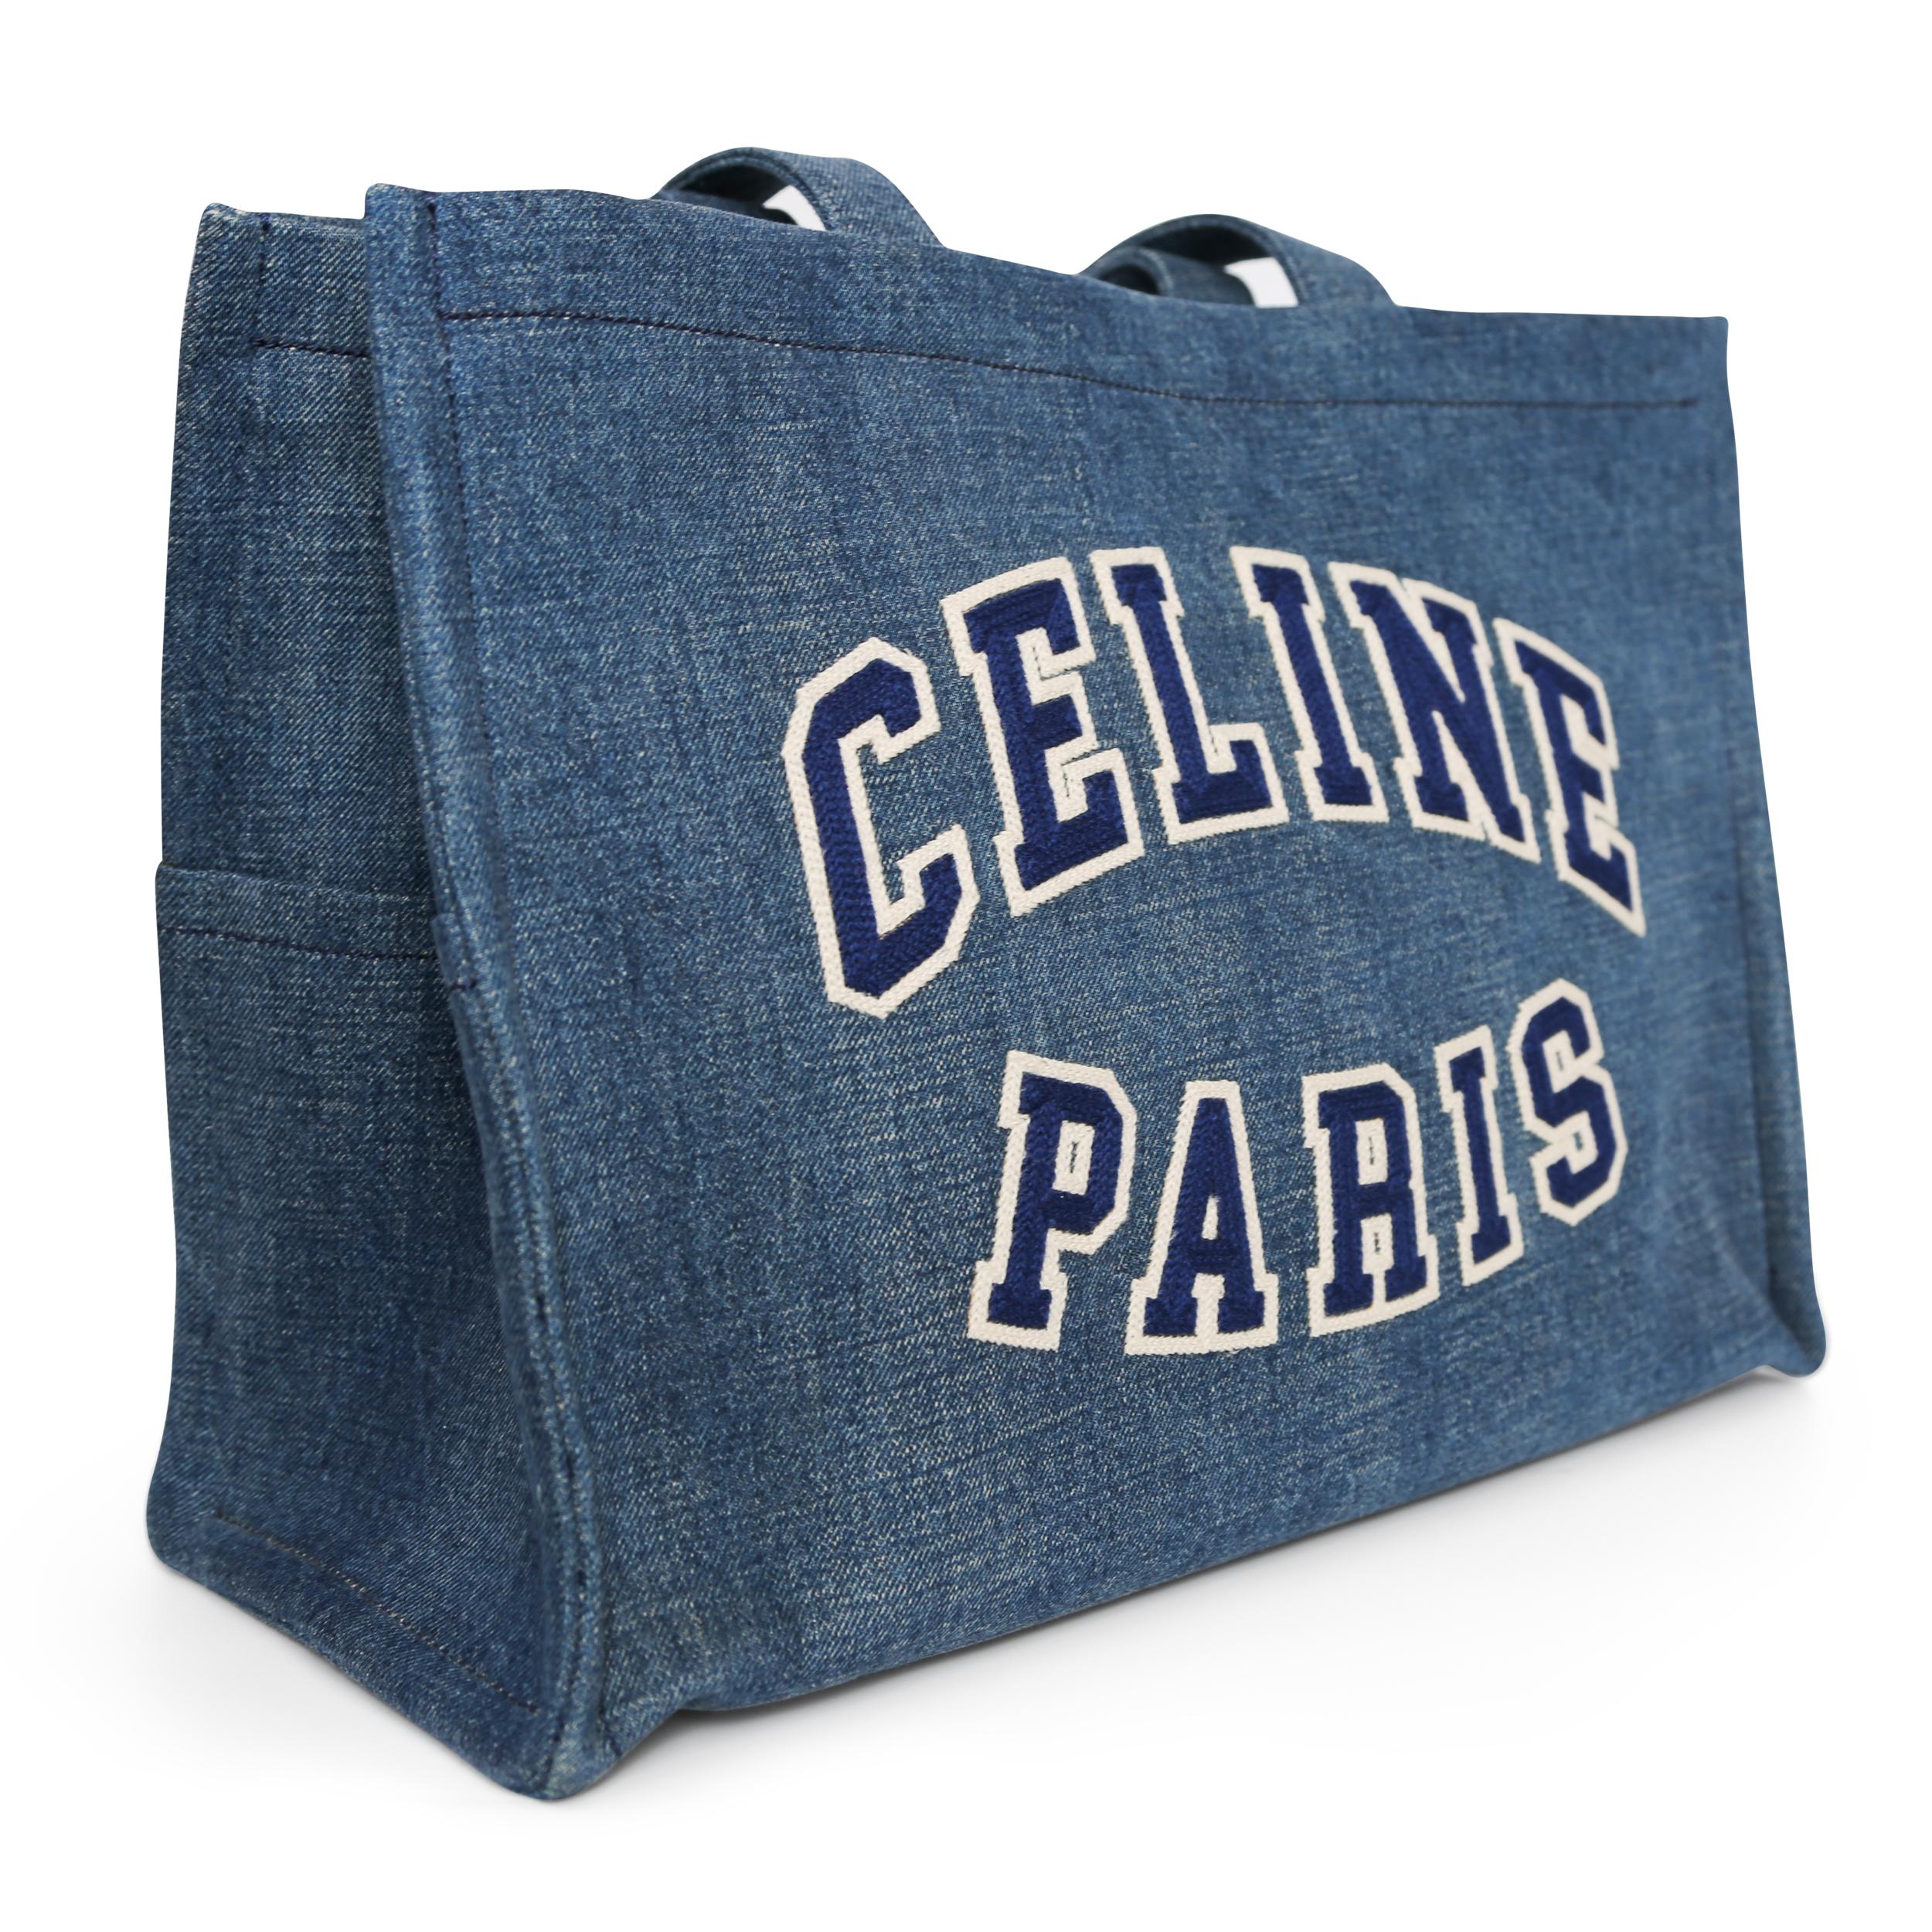 Celine Cabas Denim Paris Tote Bag In Excellent Condition For Sale In London, GB